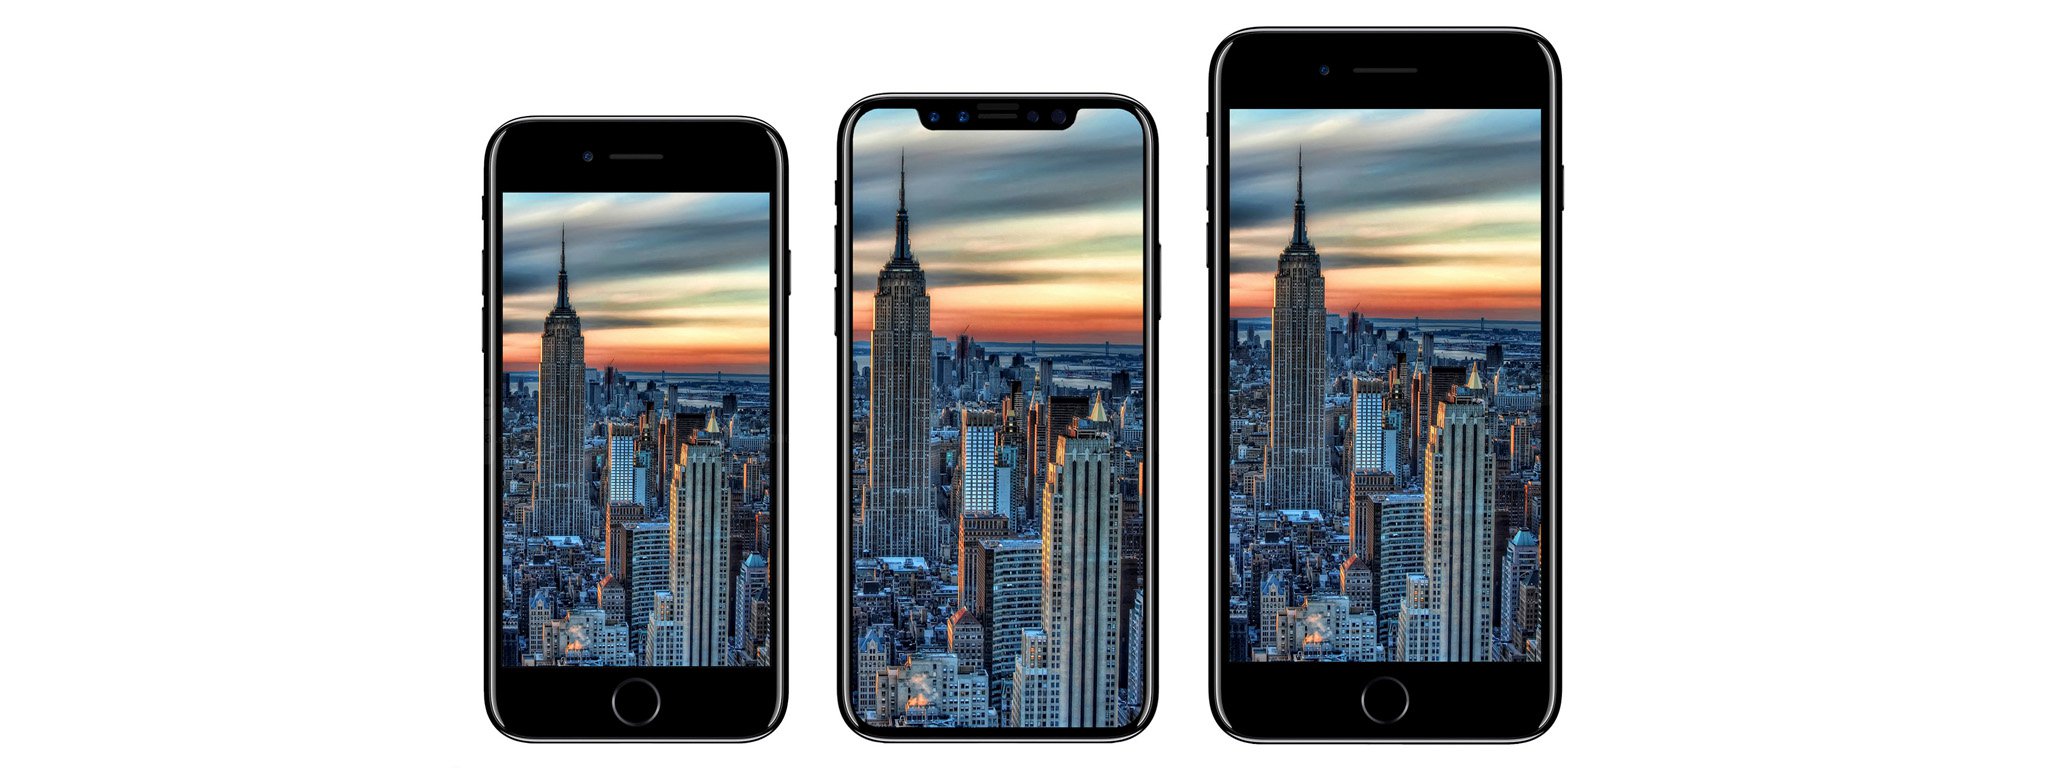 Apple dự kiến bán 55 triệu iPhone màn hình OLED và 15 triệu iPhone màn hình LCD trong năm 2018